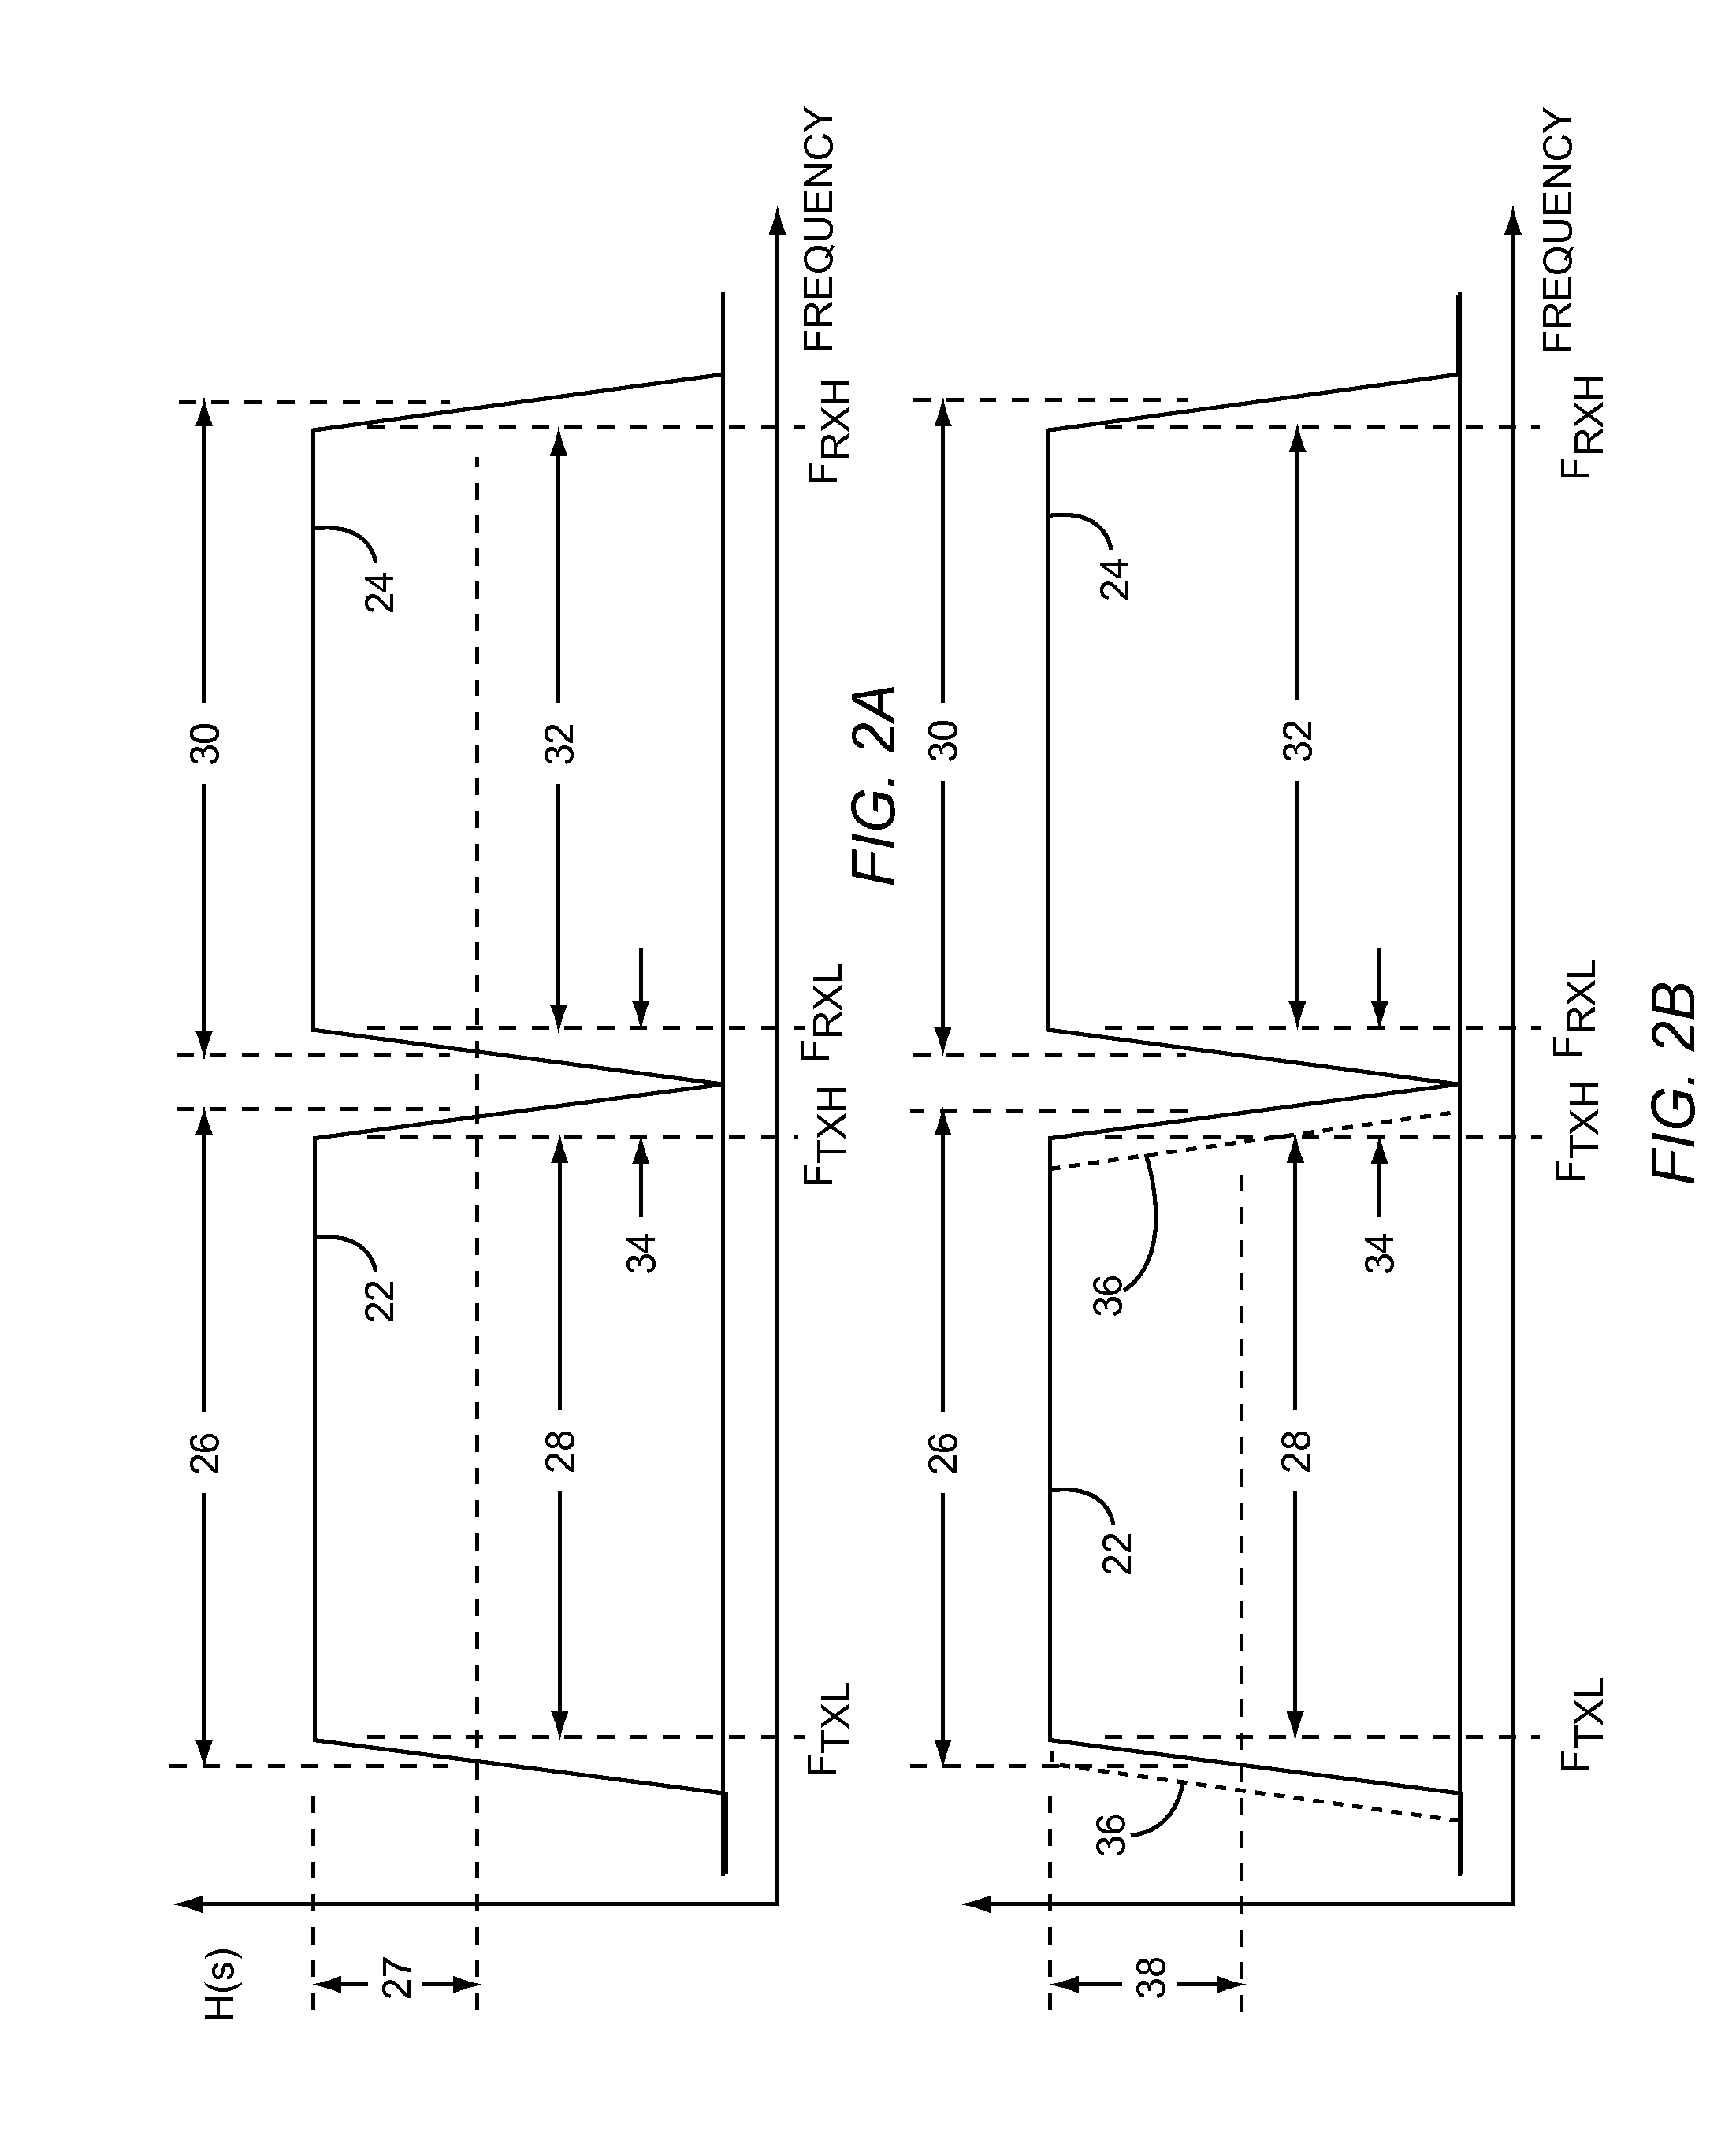 Multi-mode power amplifier architecture